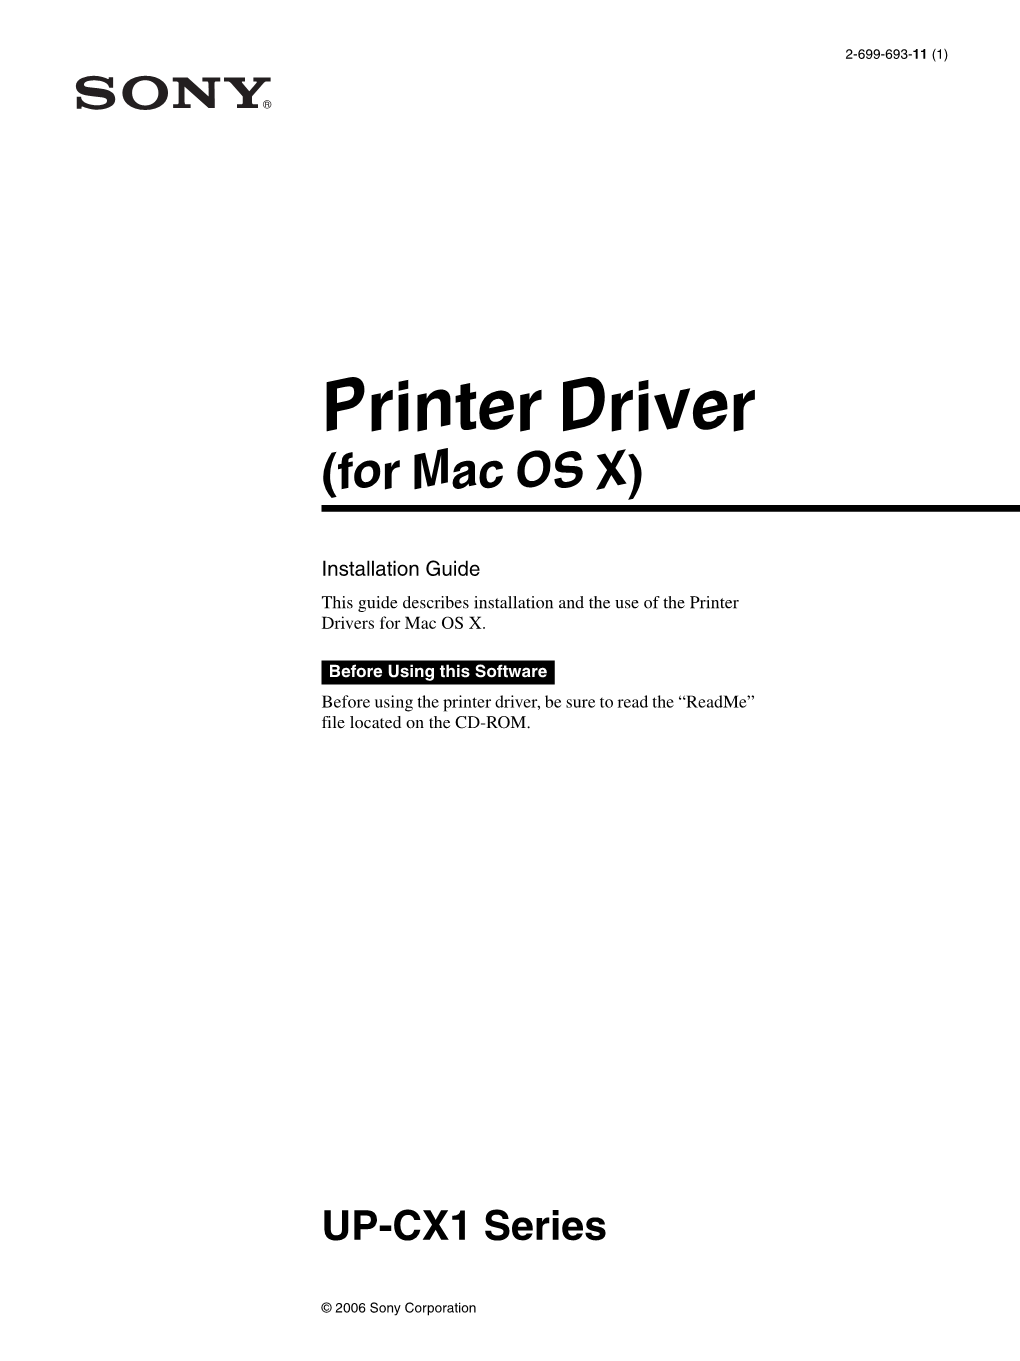 Printer Driver (For Mac OS X)